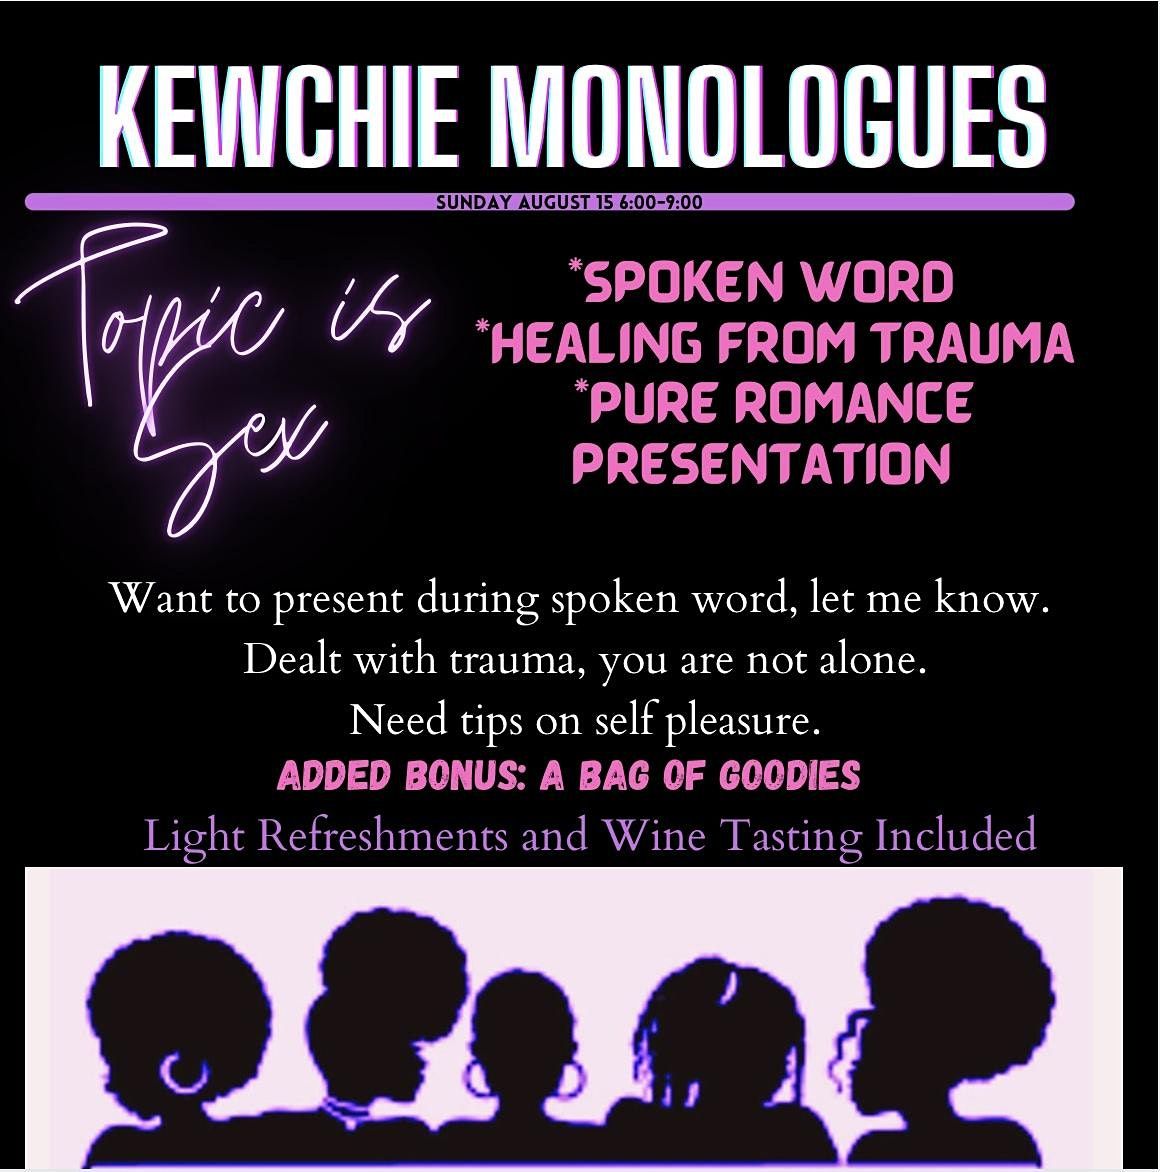 Kewchie Monologues